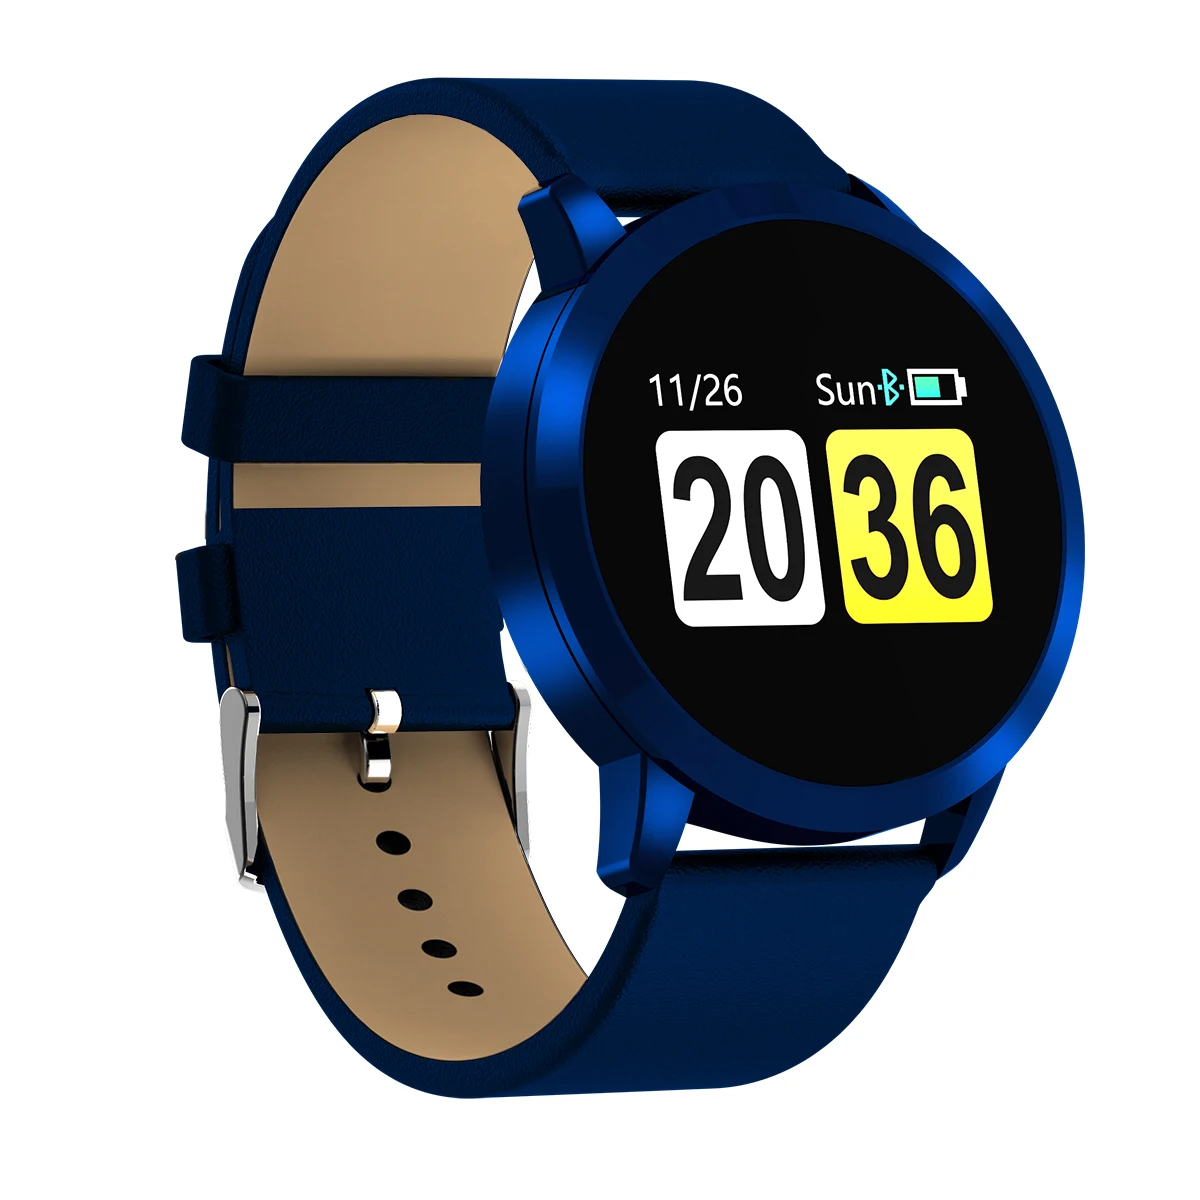 

Blood pressure heart rate measurement smart watch Q8 Bluetooth pedometer smart watch men touch color screen message notification